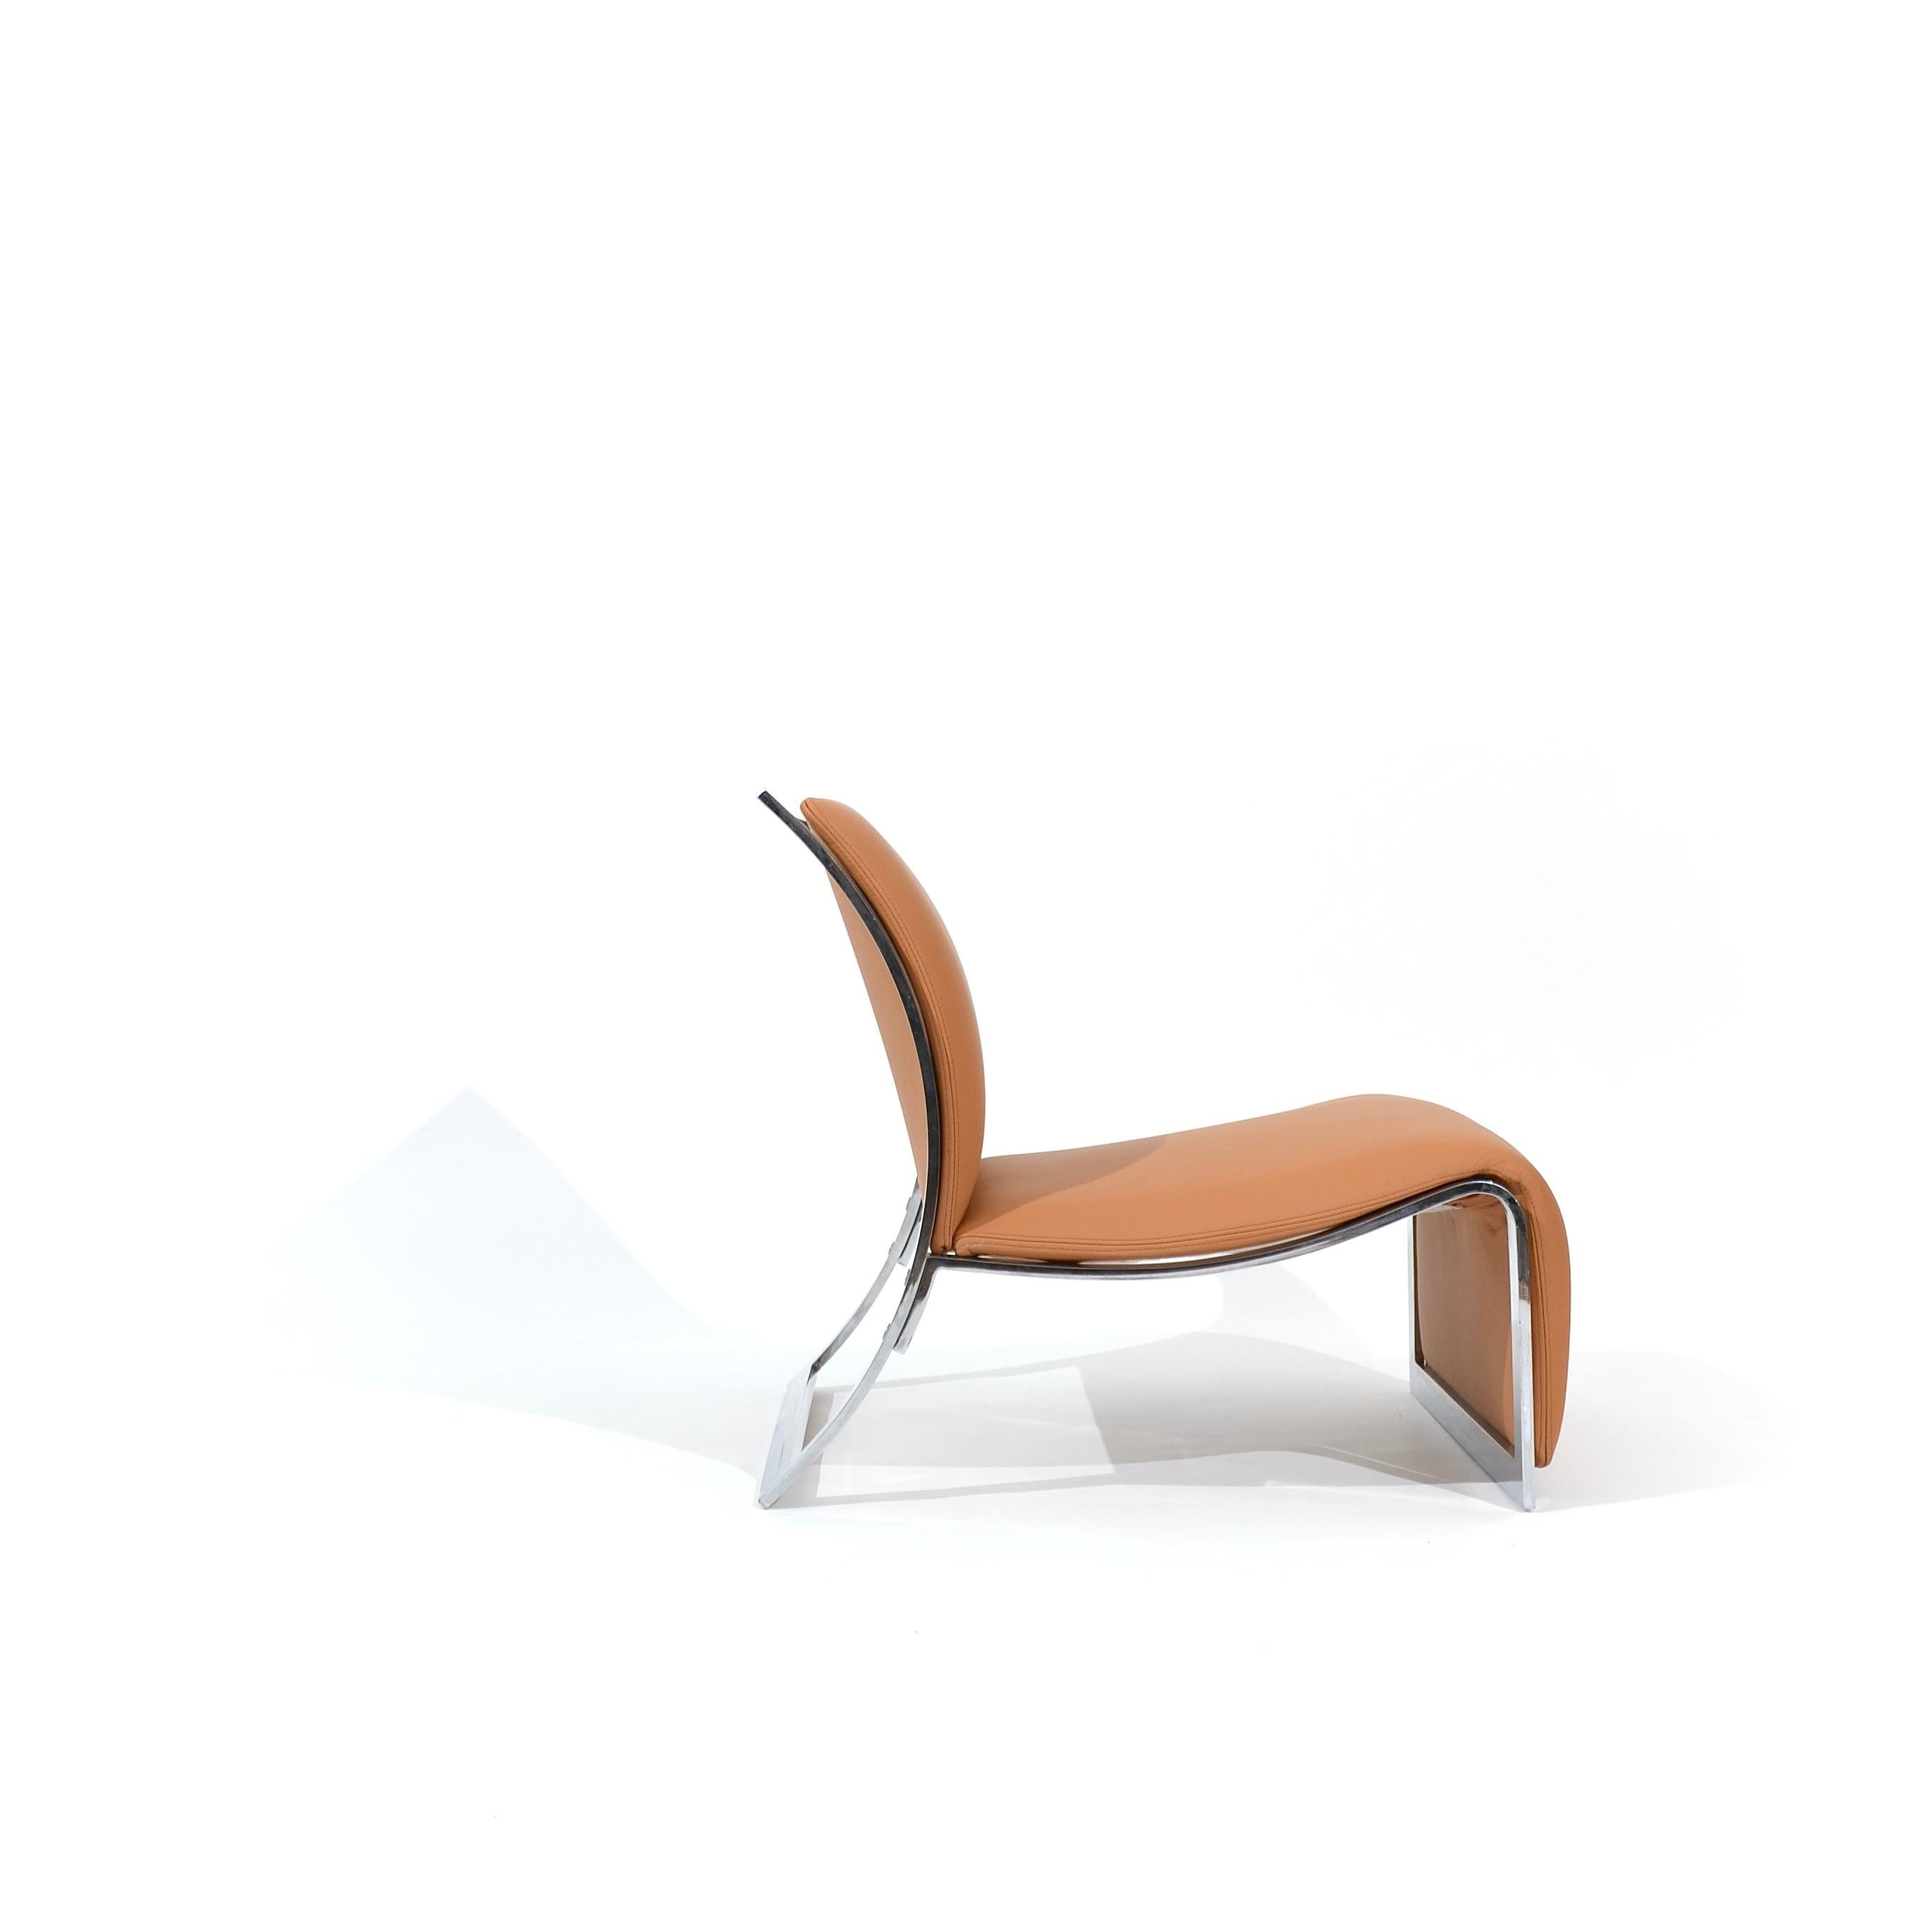 Saporiti leather lounge chairs, Vittorio Introini, Italy, 1965 For Sale 5